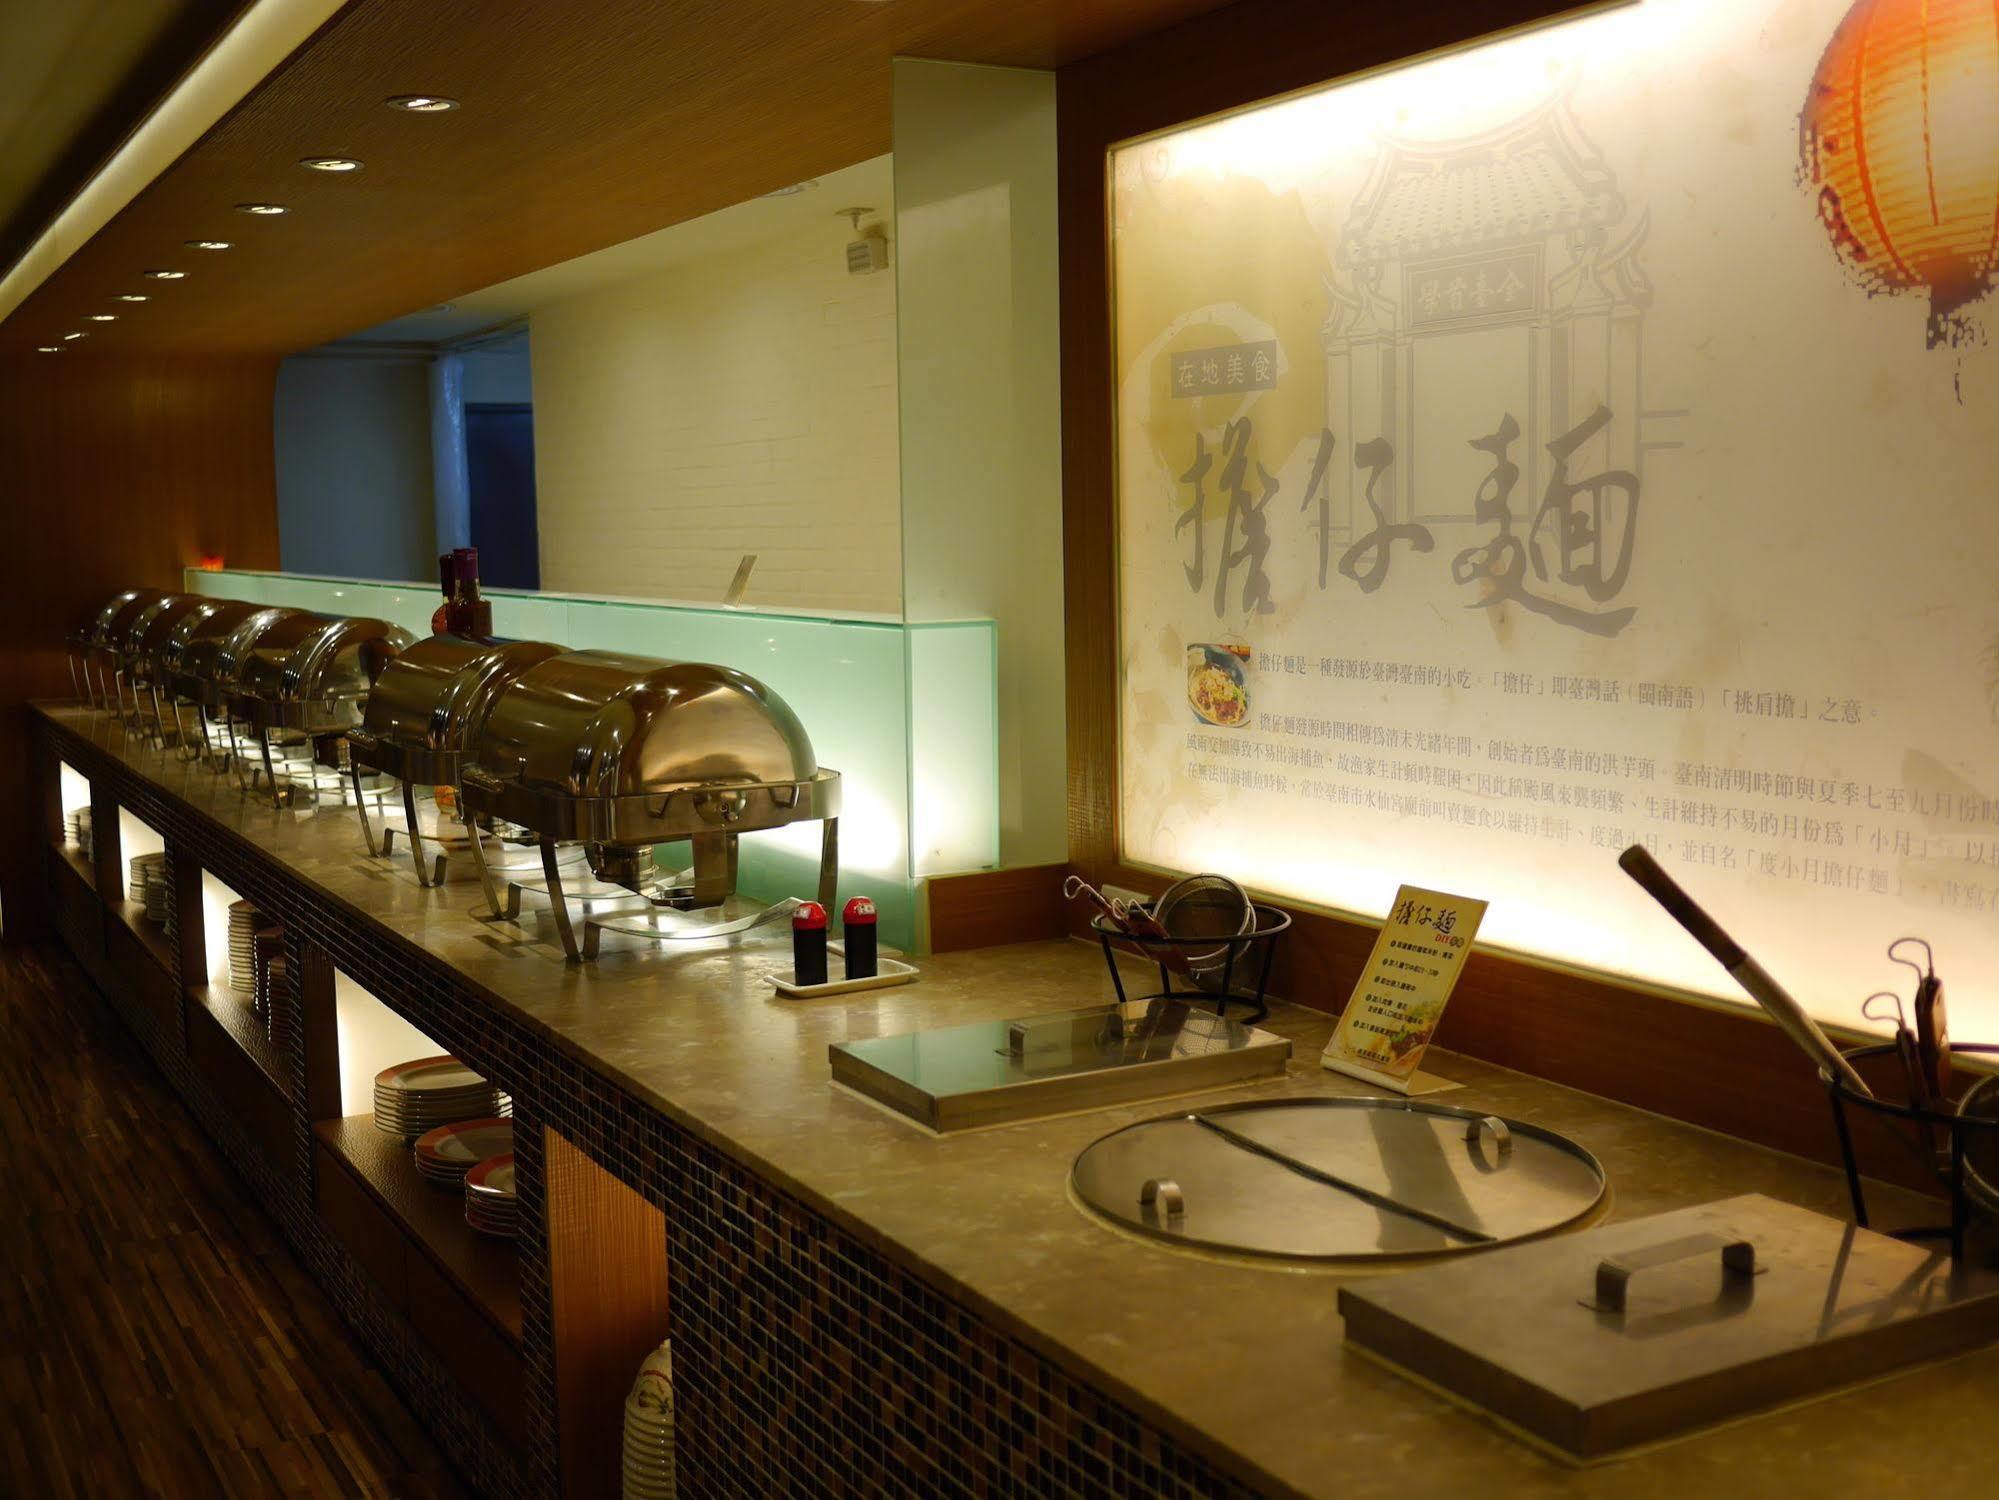 Toongmao Hotel גאושיונג מראה חיצוני תמונה